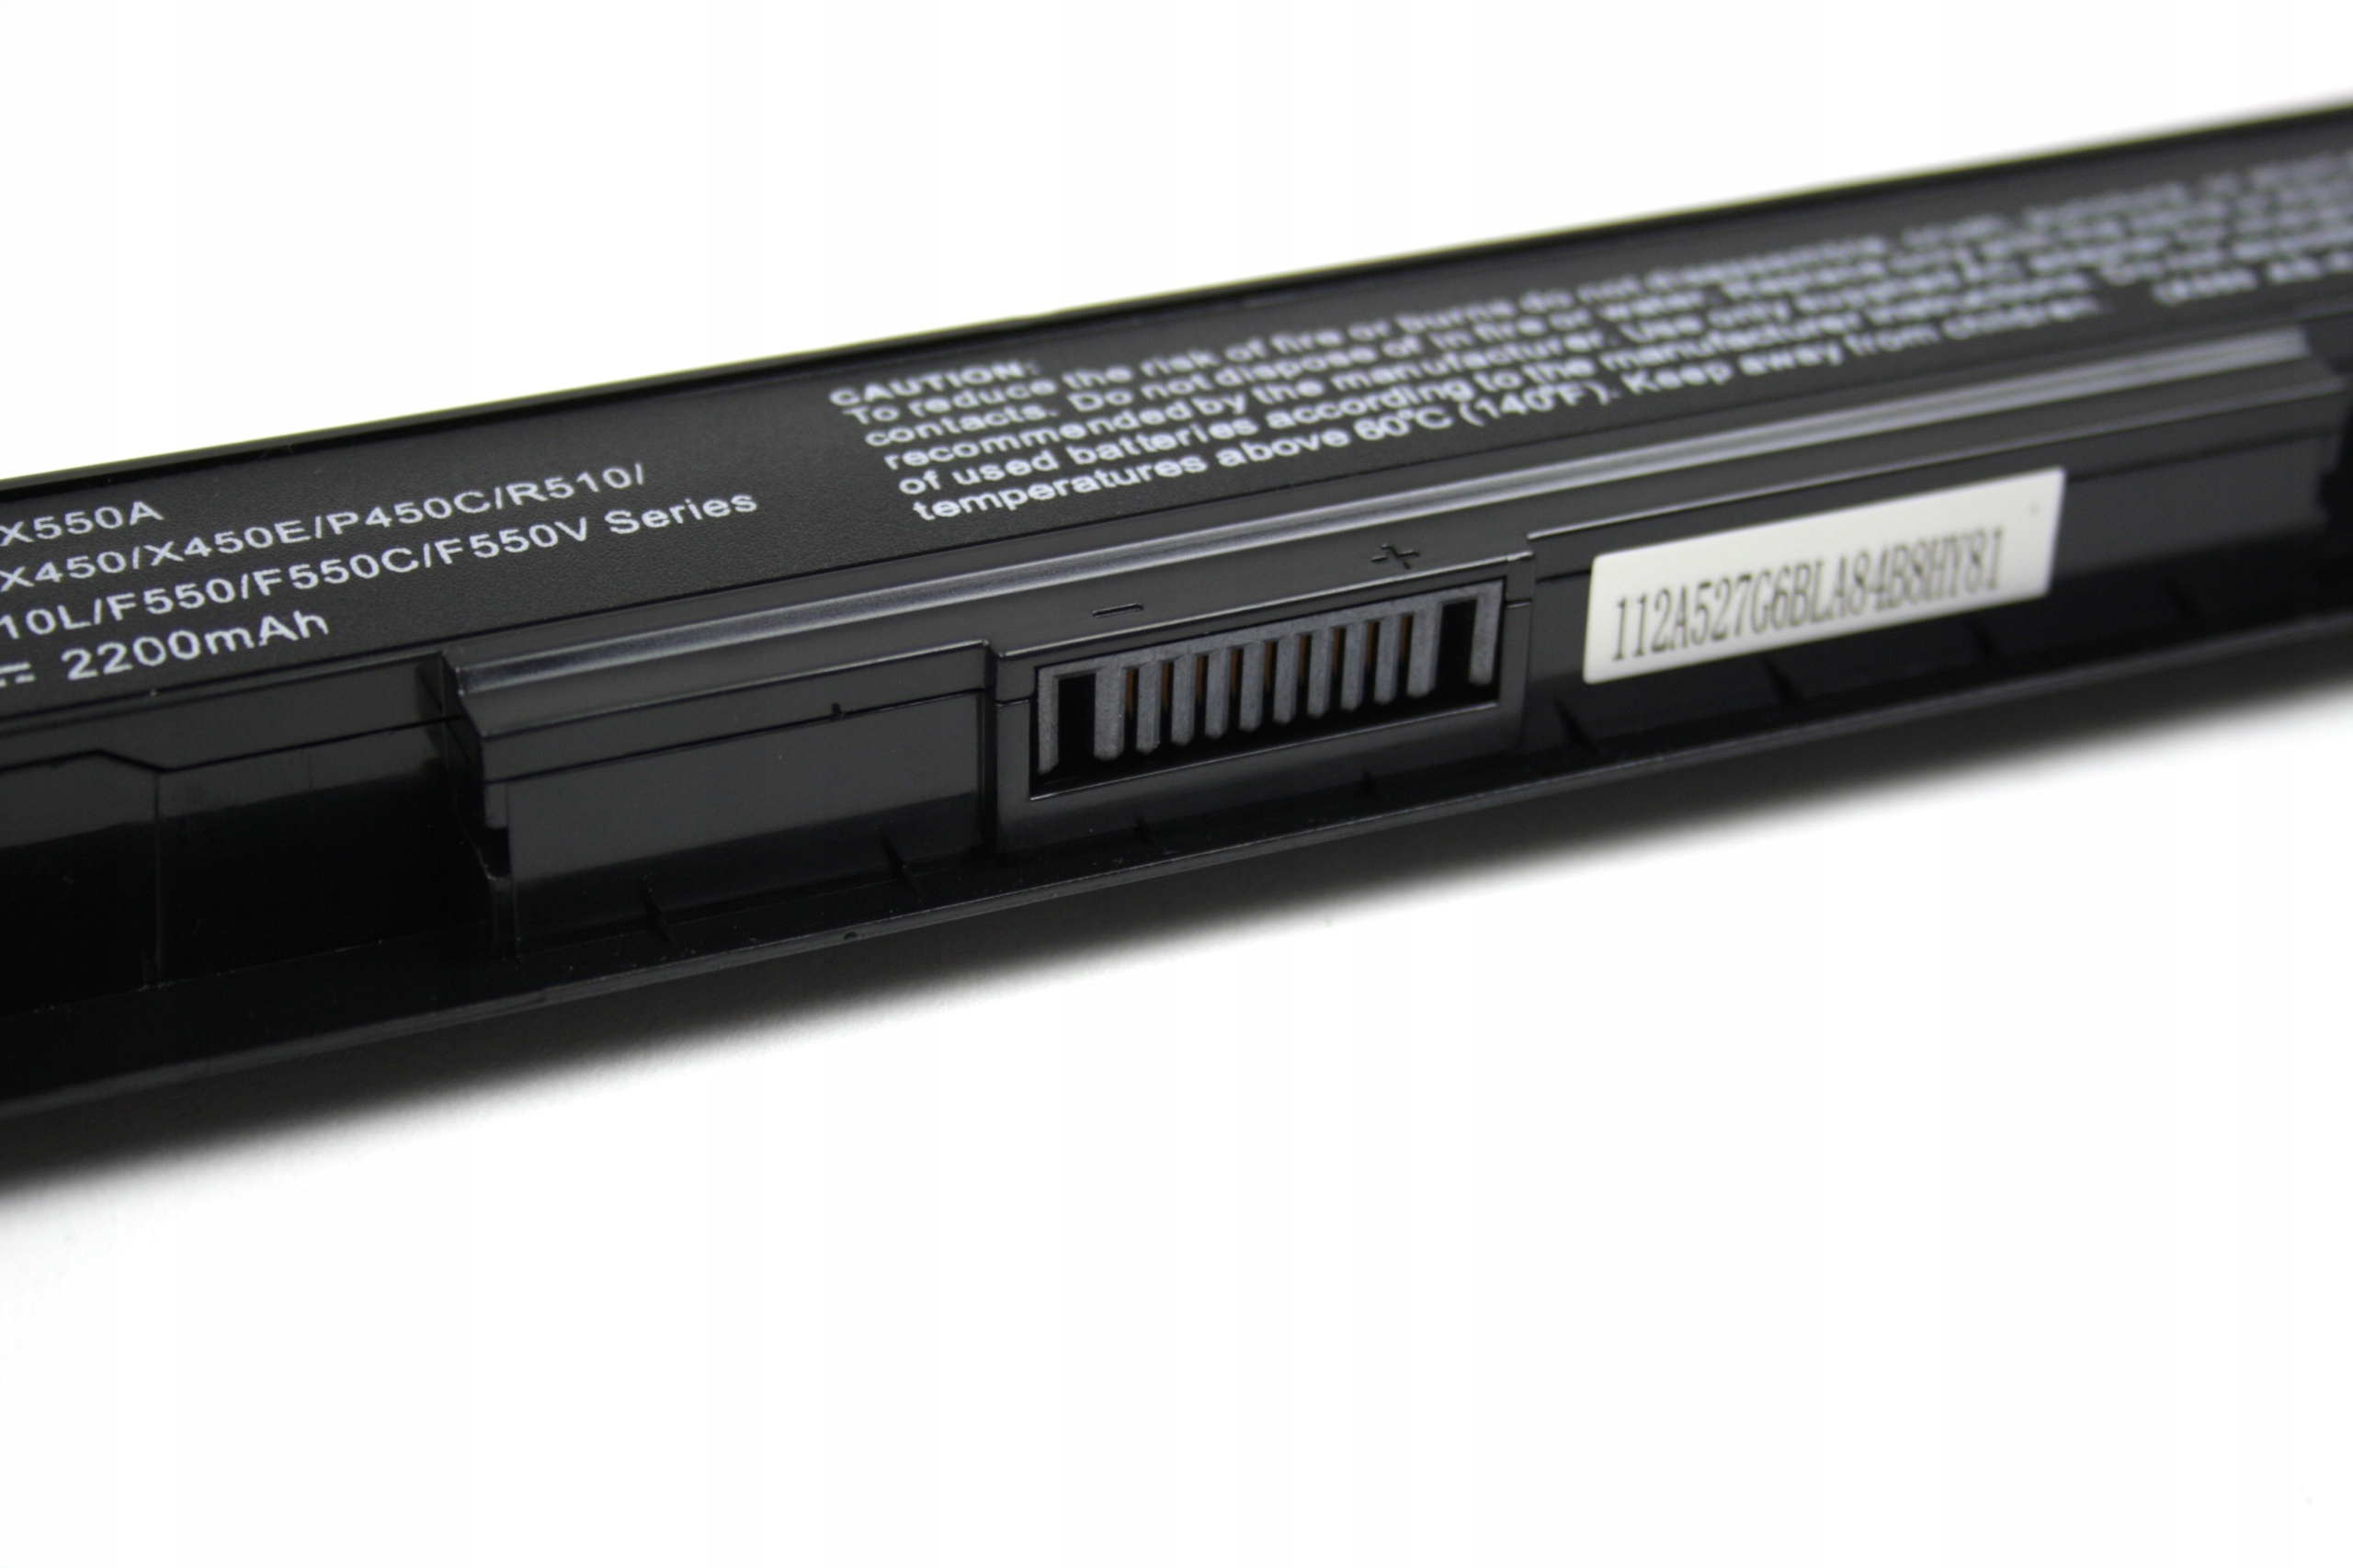 X 41 x 5 3. X550 аккумулятор. A41-x550a аккумулятор для ноутбука ASUS. Аккумулятор OEM для ноутбука ASUS a41-x550a. Li-lon Battery Pack a41-x550a.